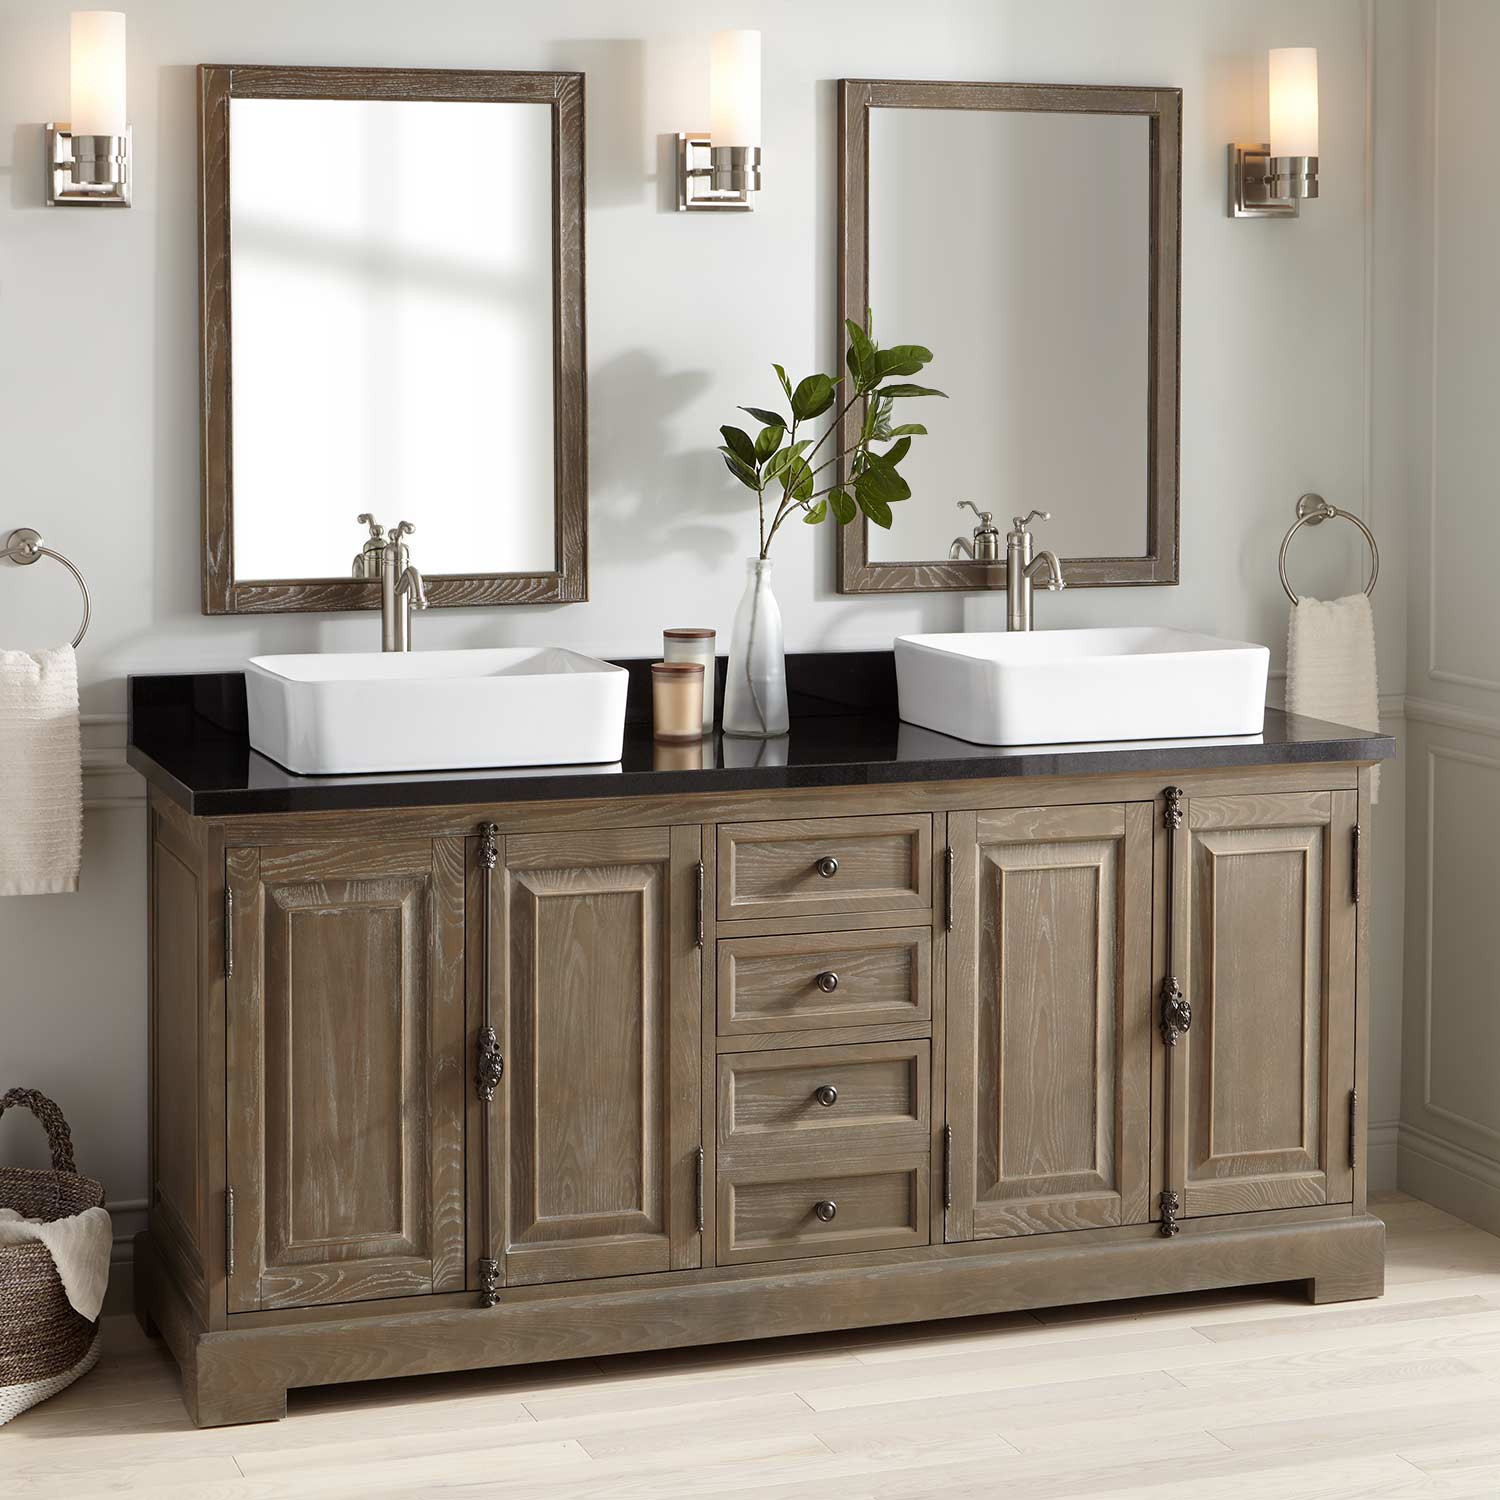 Bathroom Double Vanity Cabinets
 72" Chelles Double Vessel Sink Vanity Gray Wash Double